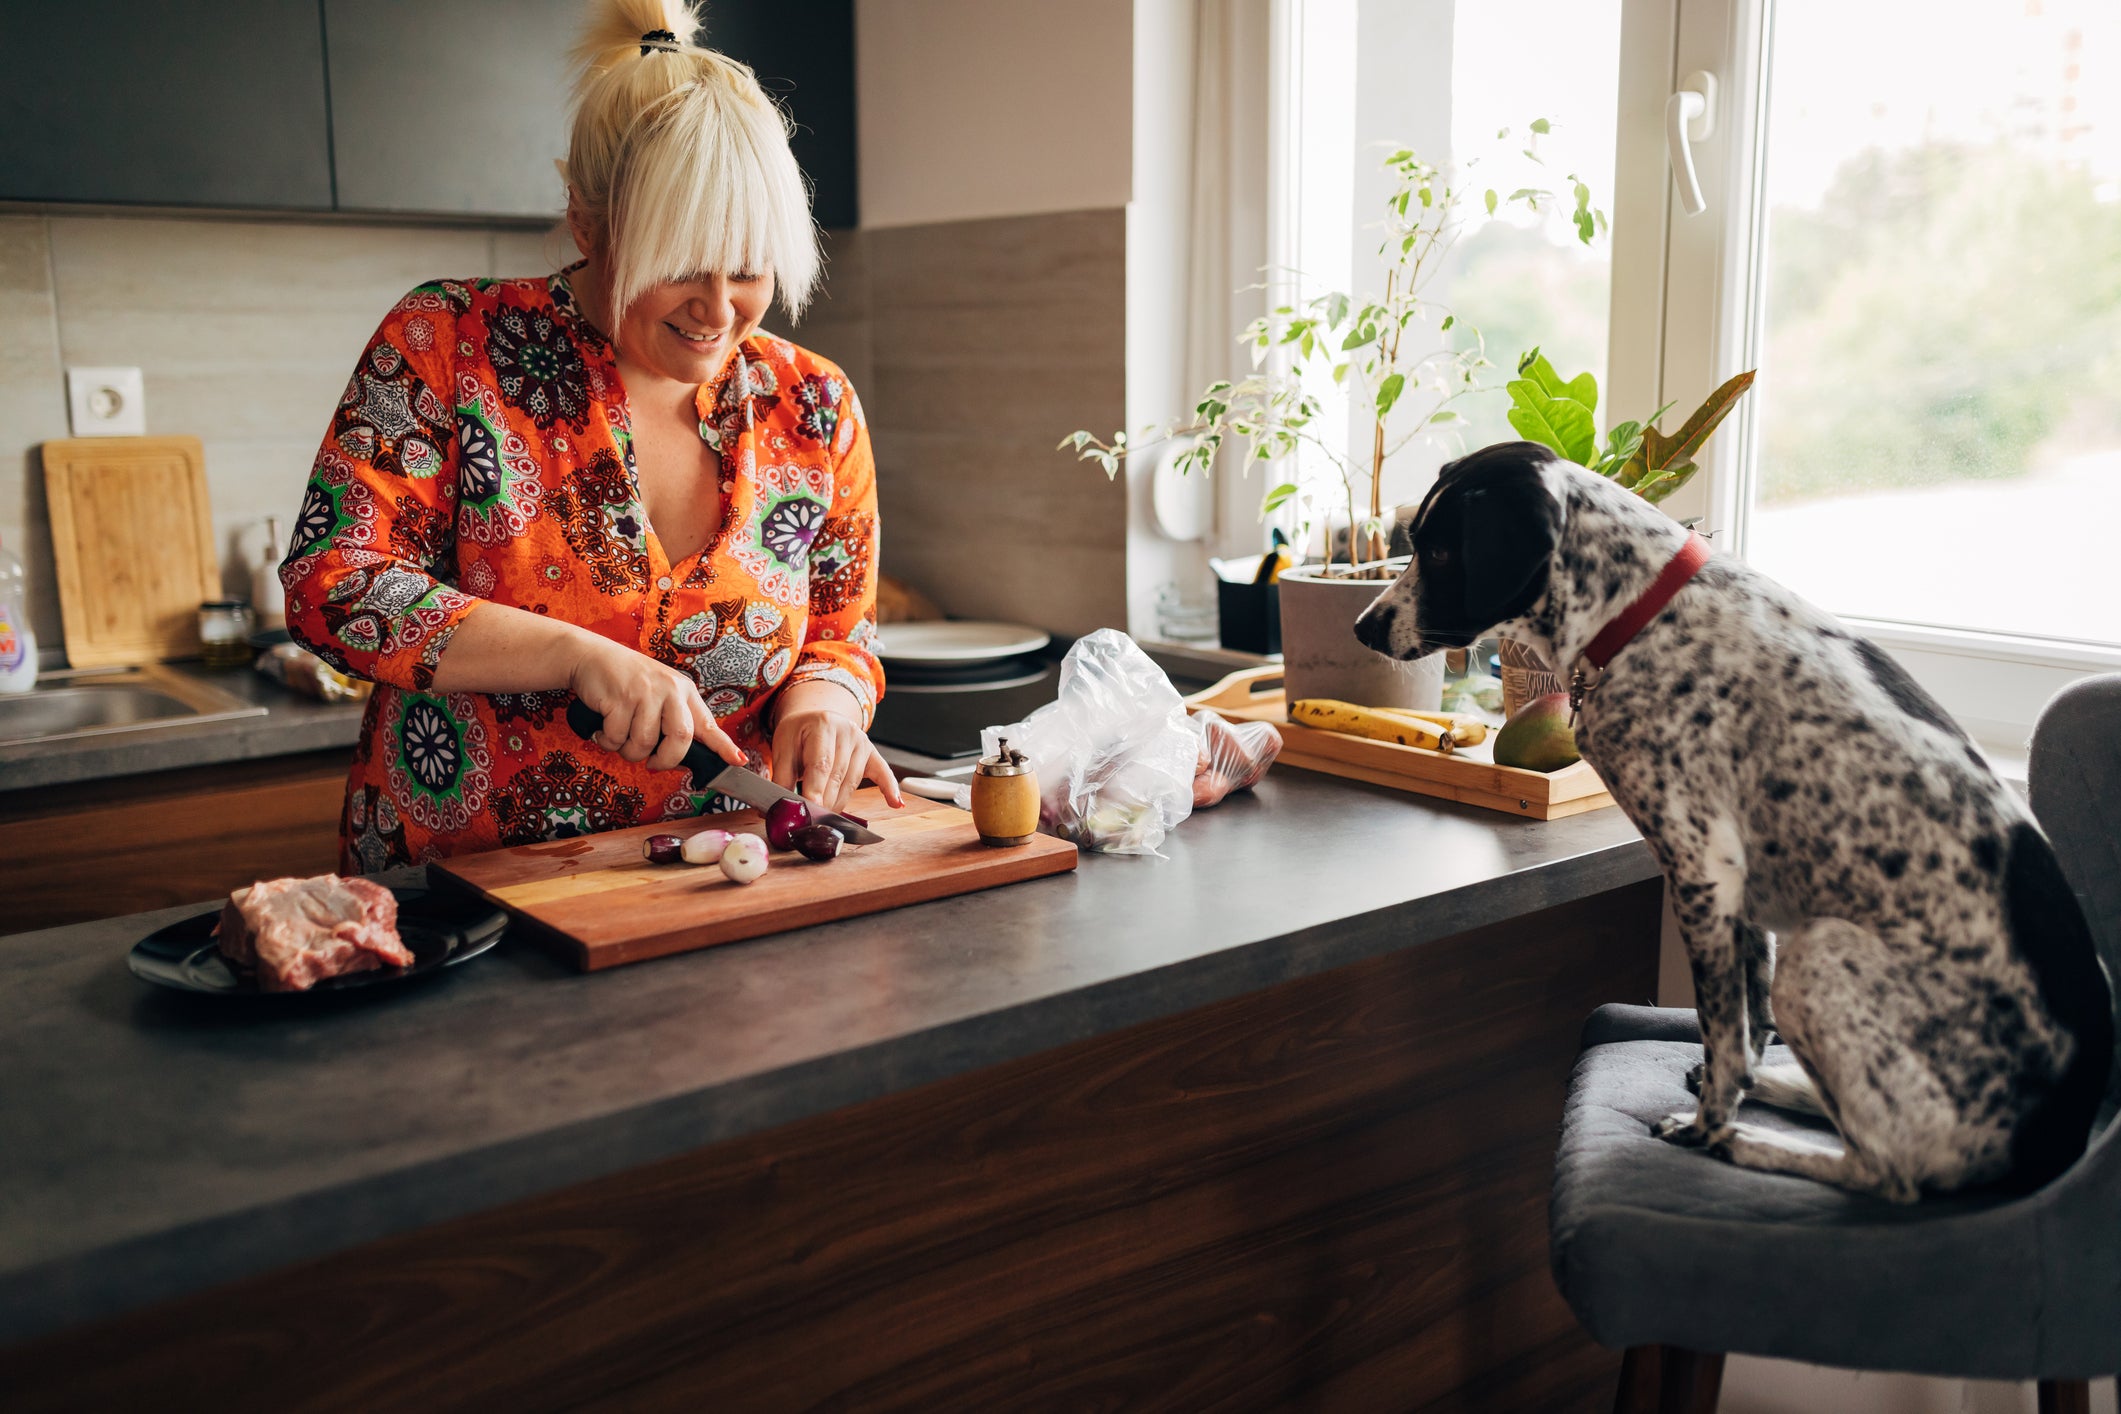 Mulher cortando carnes na cozinha enquanto cachorro a observa